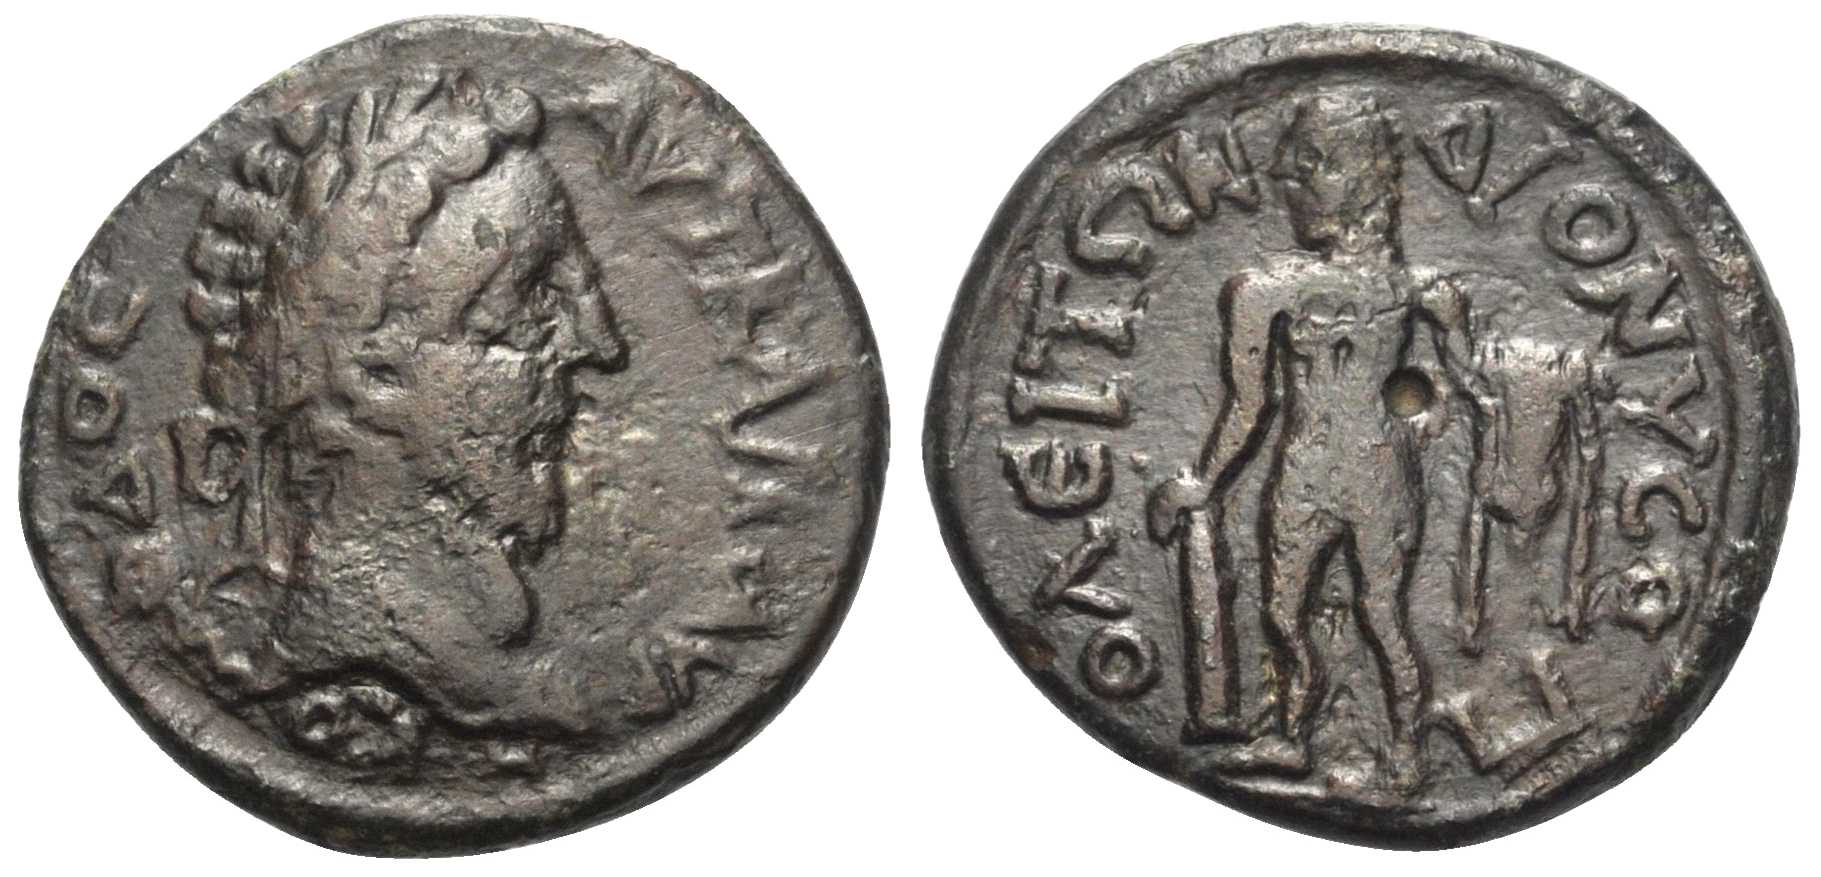 6302 Dionysopolis Moesia Inferior Commodus